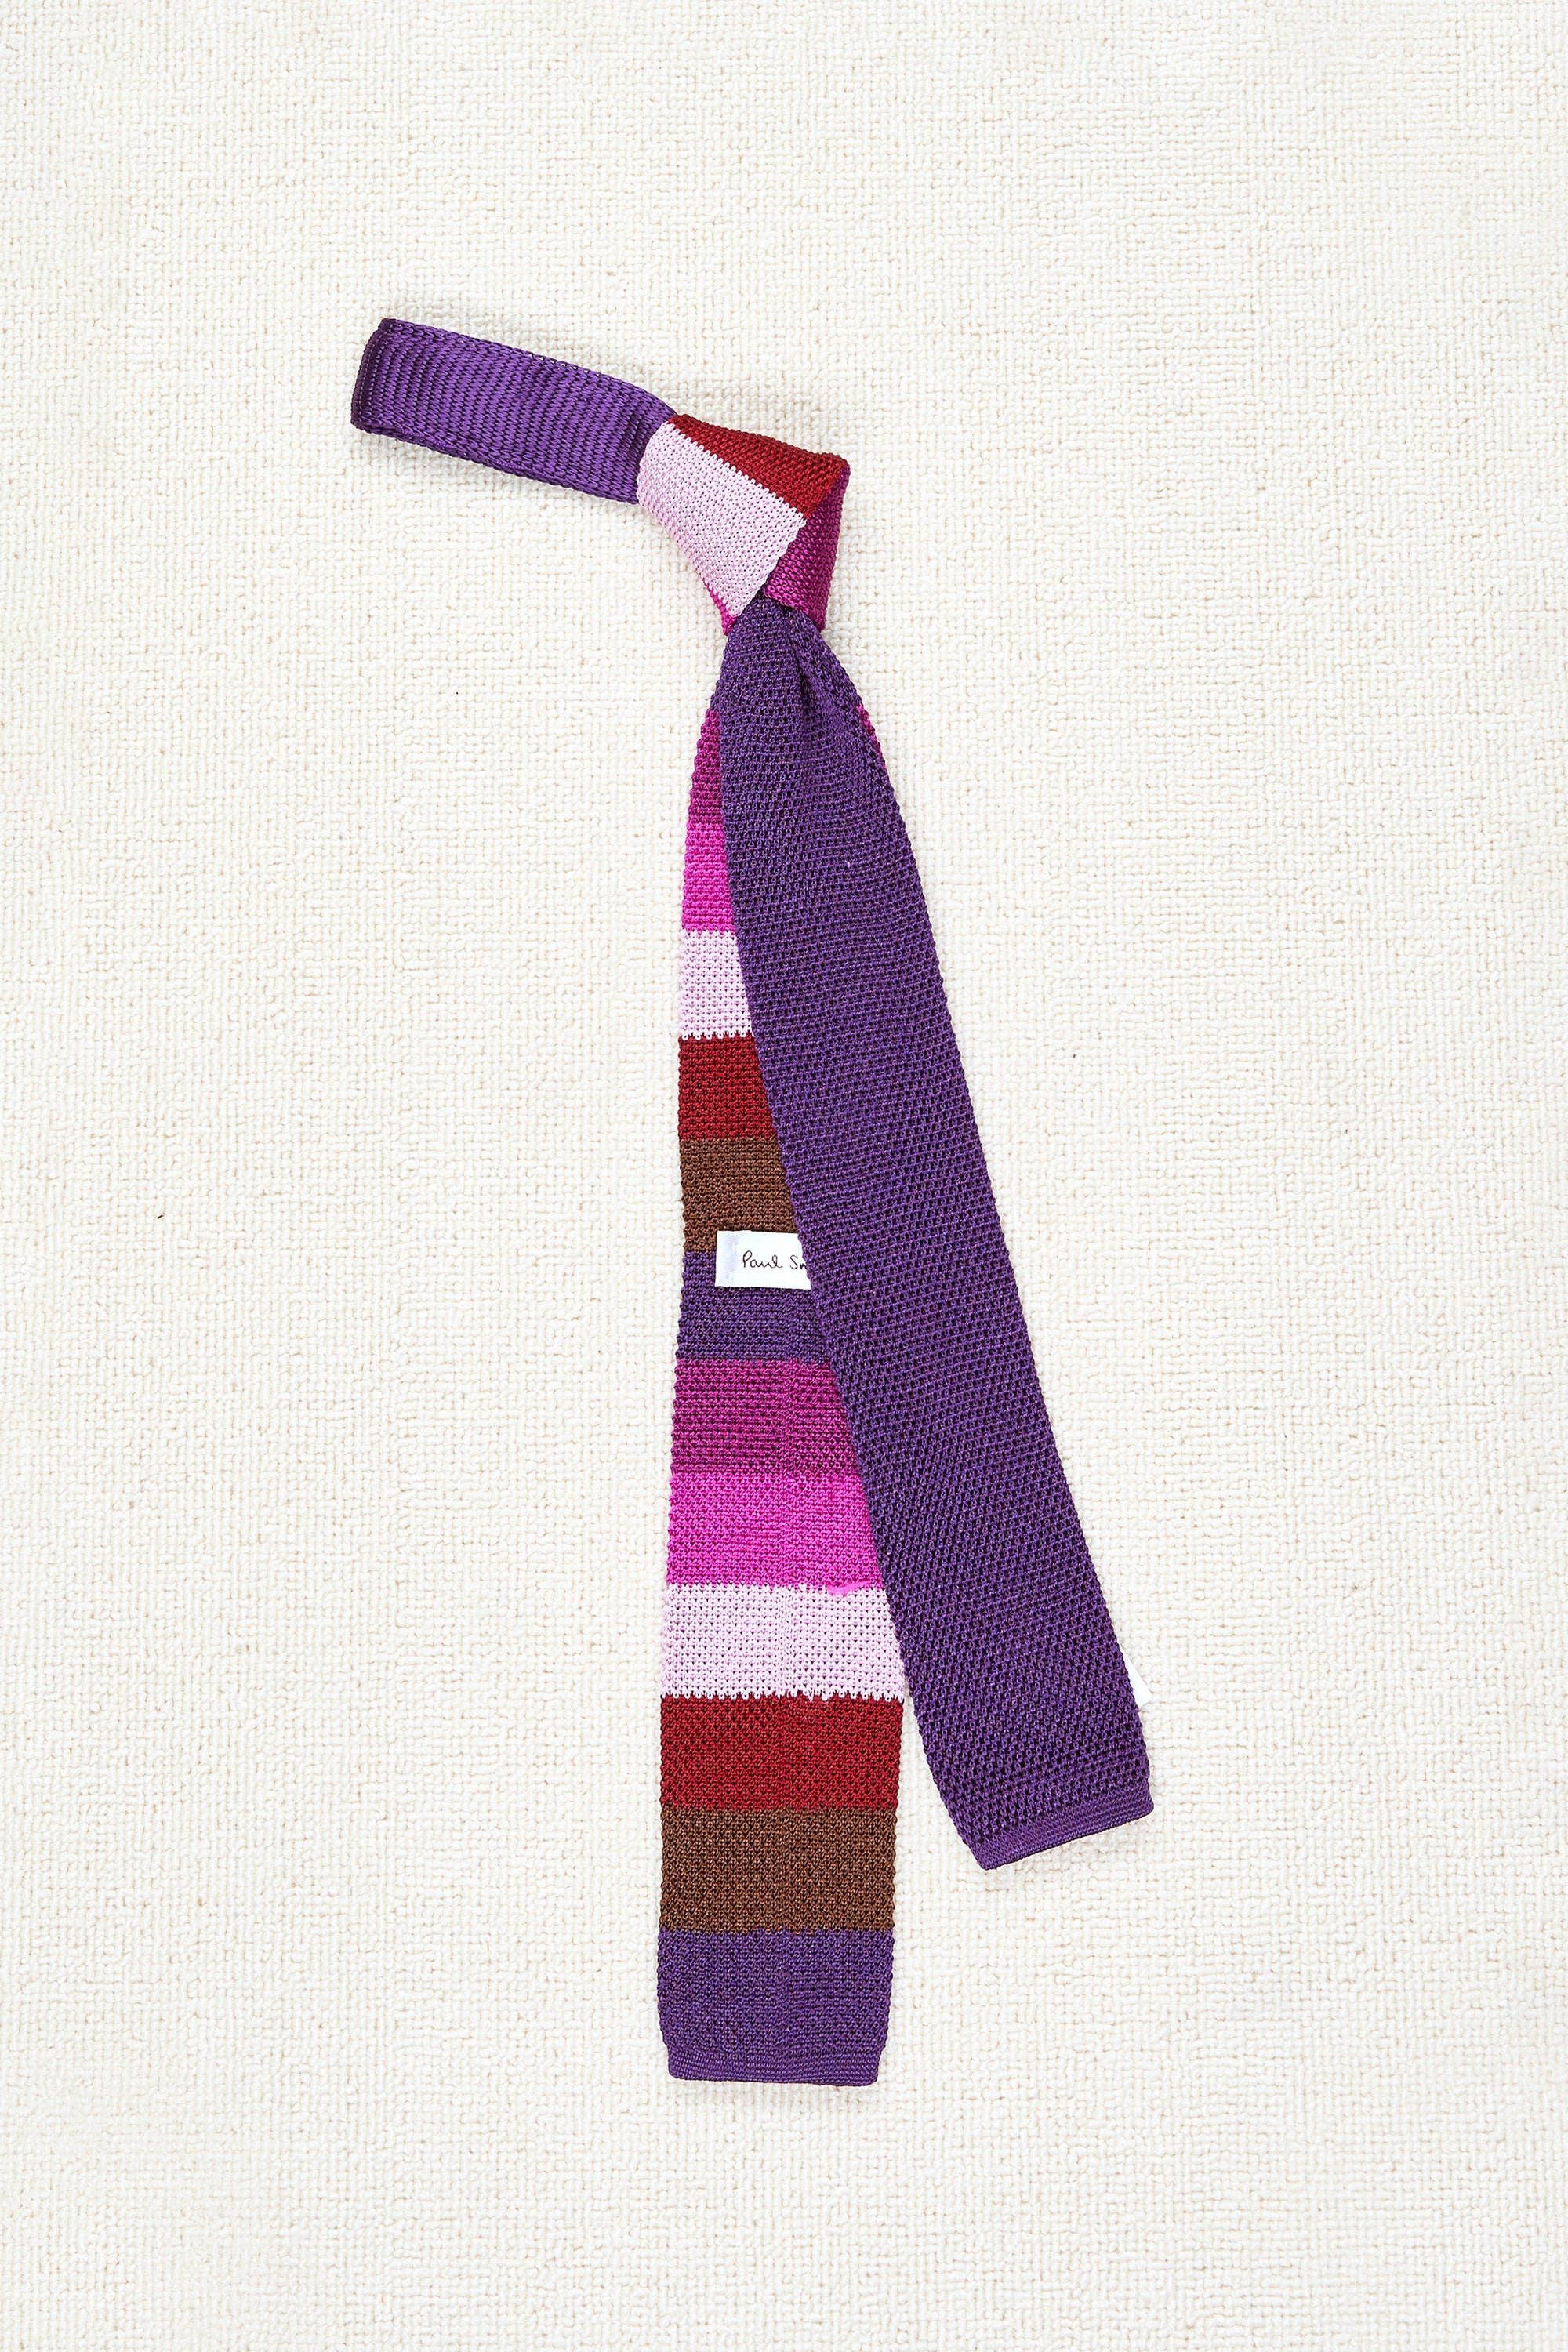 Paul Smith Purple/Brown/Red/Pink Stripe Silk Knit Tie